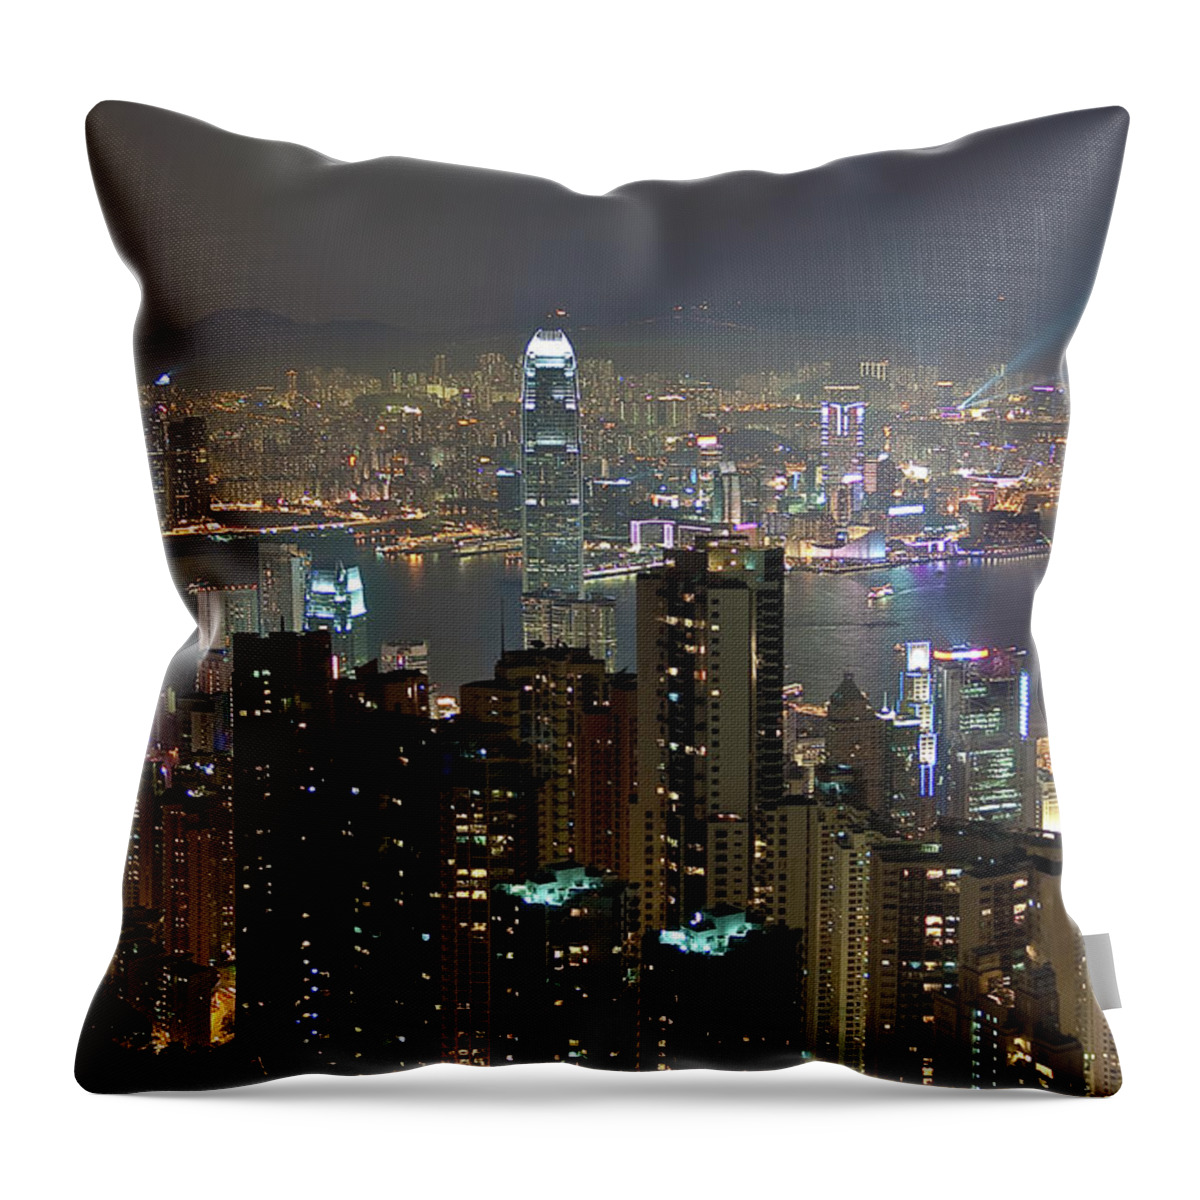 Laser Throw Pillow featuring the photograph Hong Kong At Night by Luismaxx